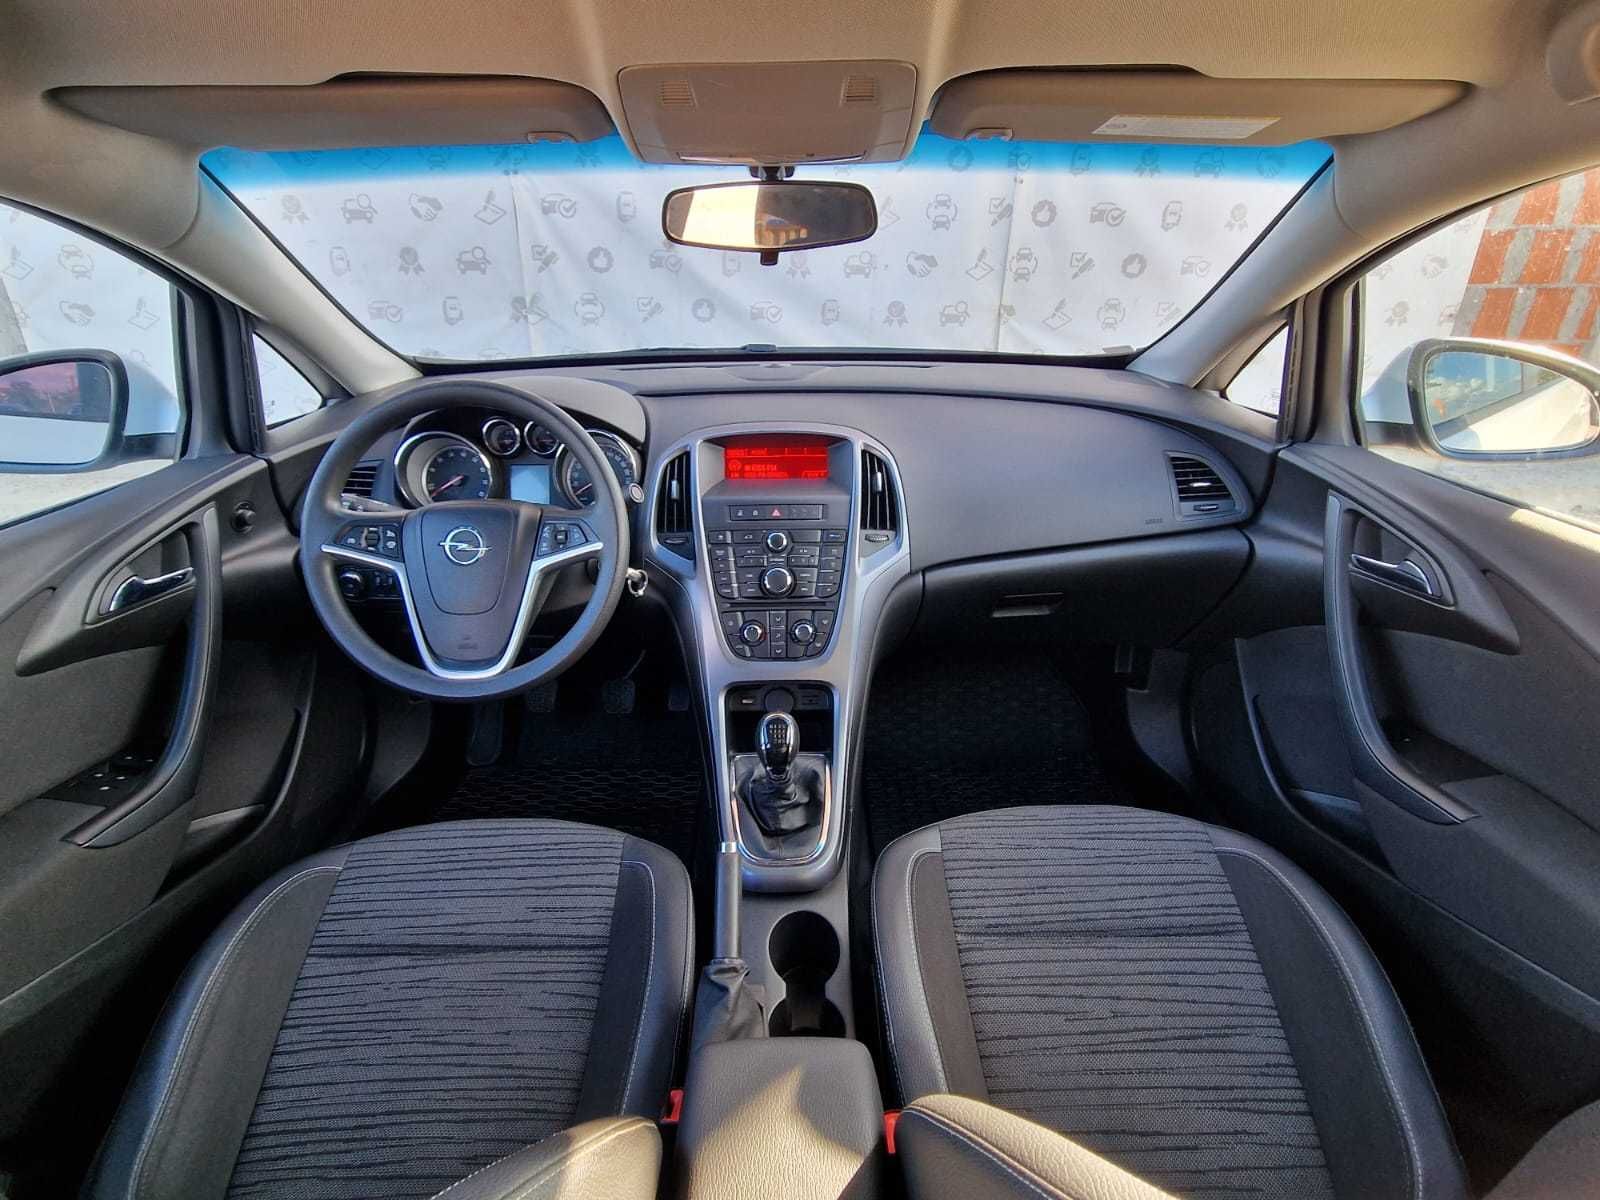 Opel Astra 1.4 Benzina | 140cp Euro6 | Garantie | Leasing | Rate fixe